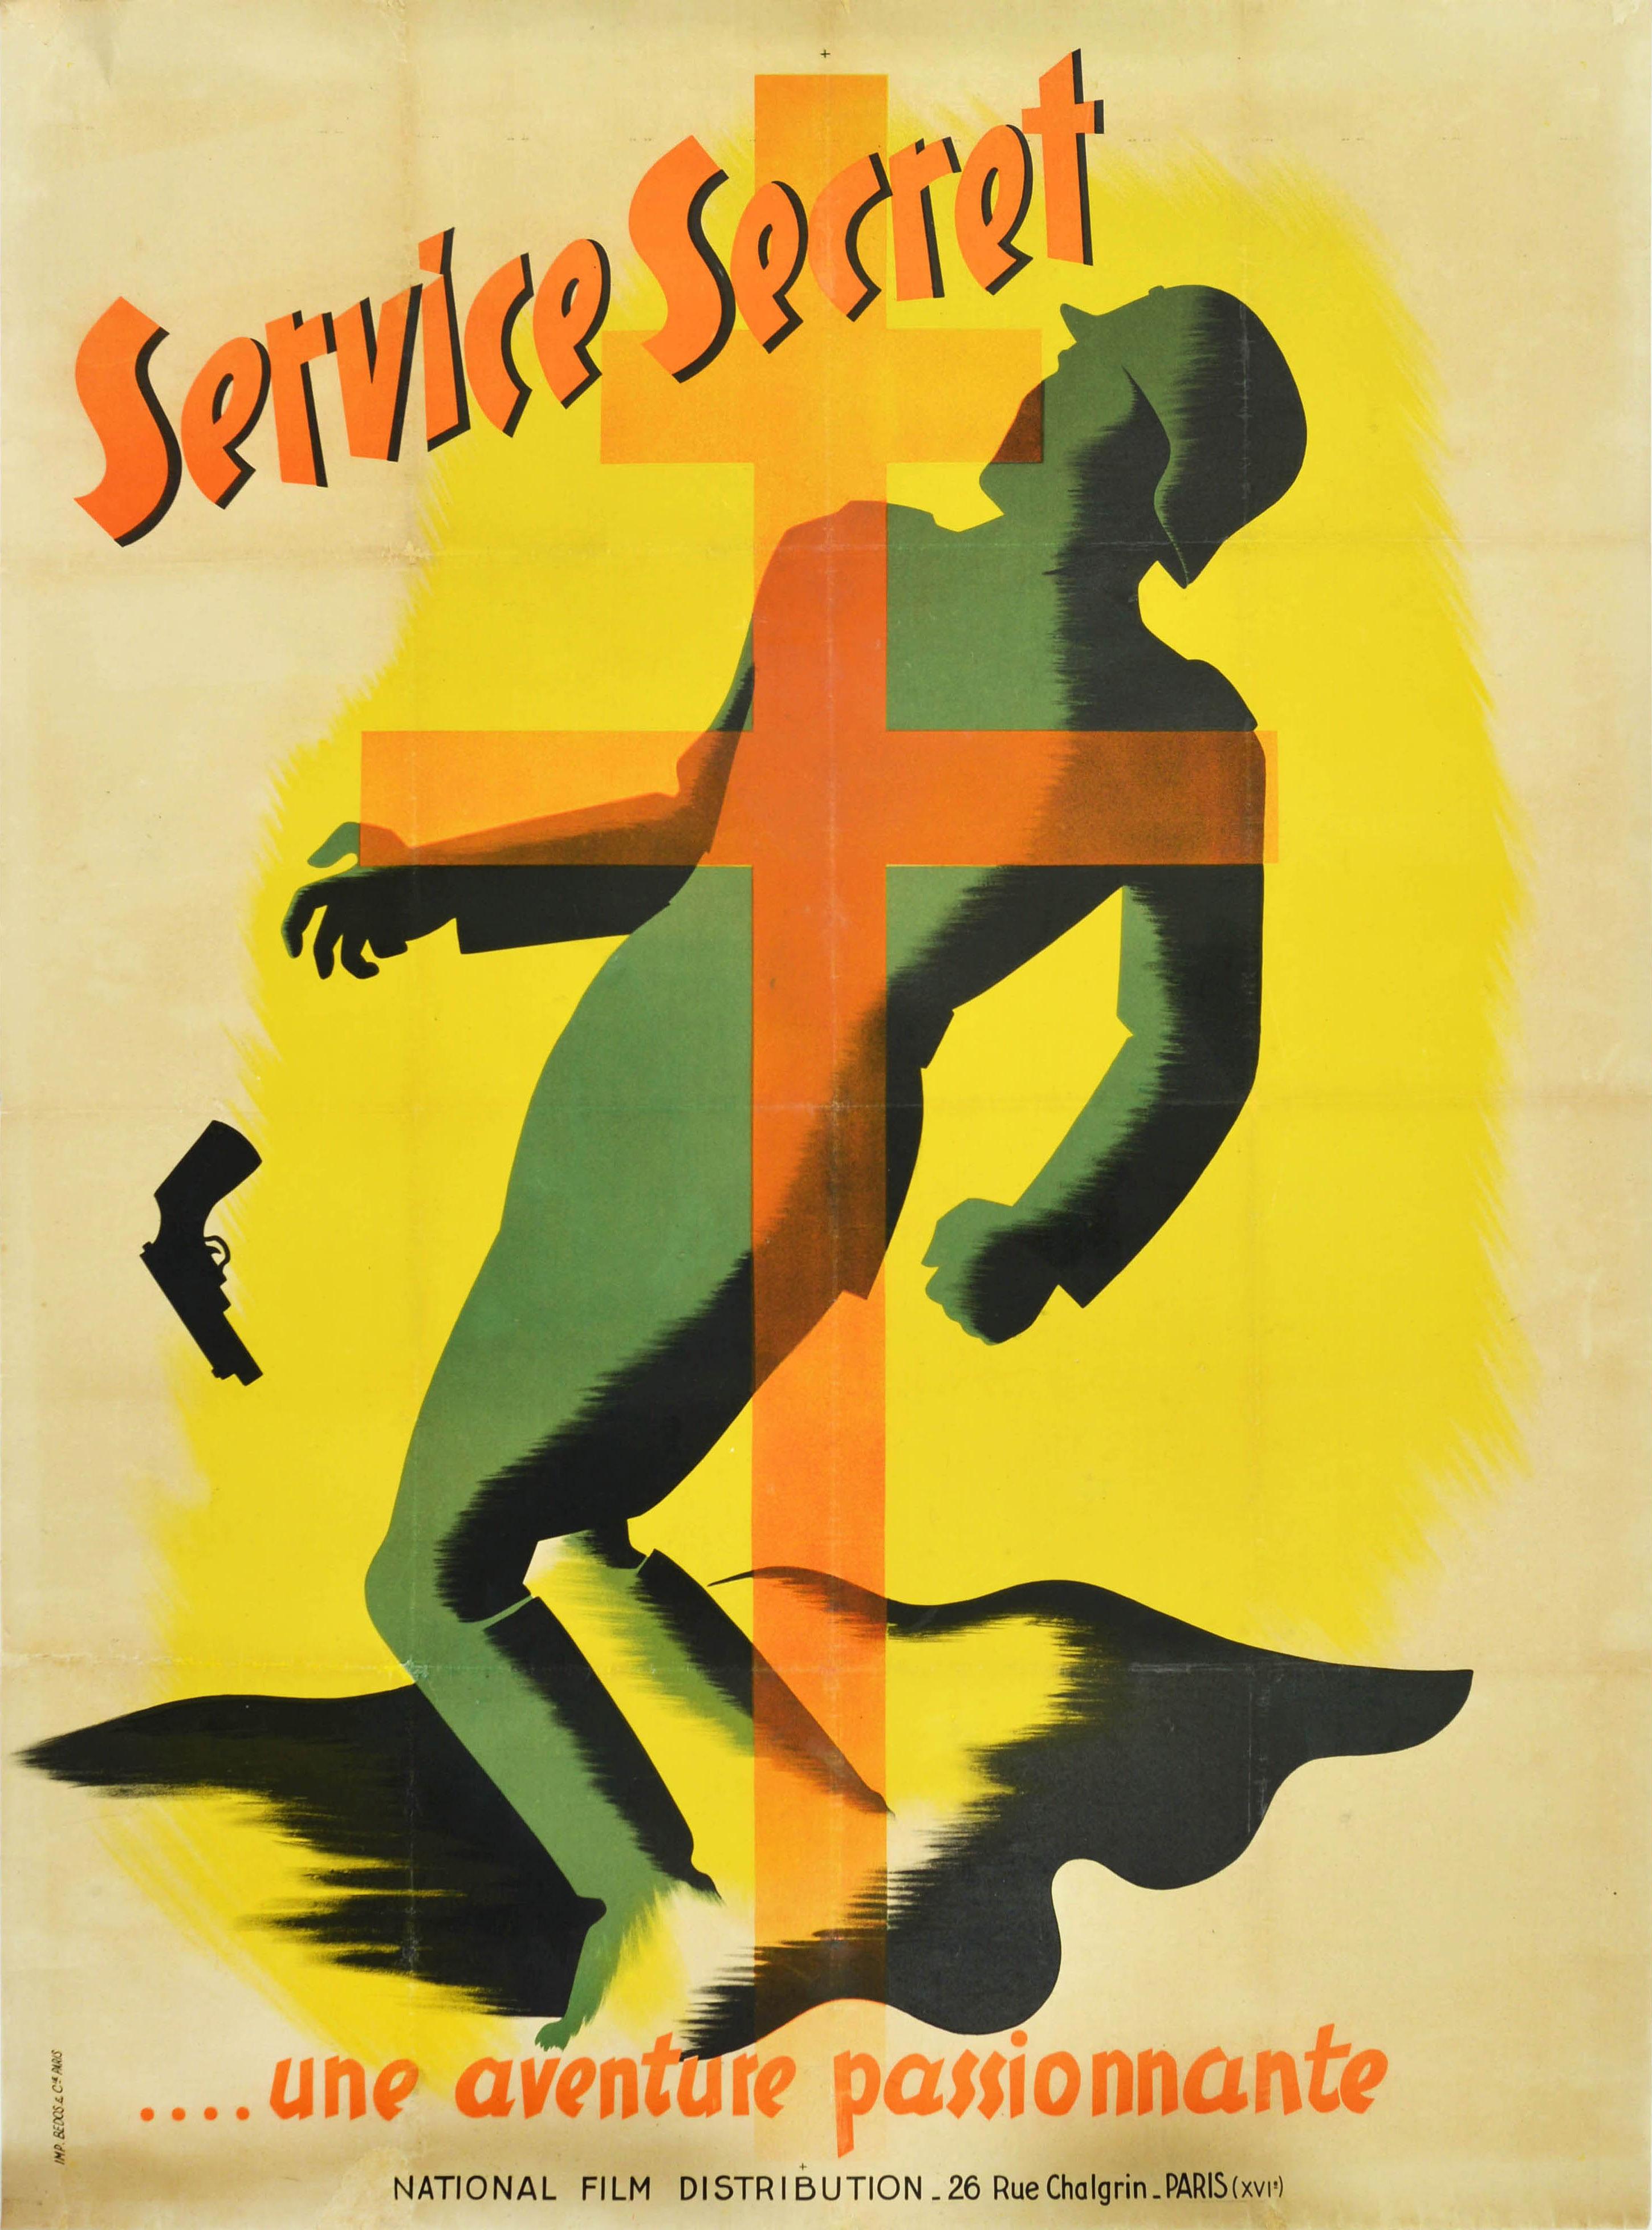 Unknown Print - Original Vintage WWII Film Poster Service Secret Mission Spy War Drama Movie Art